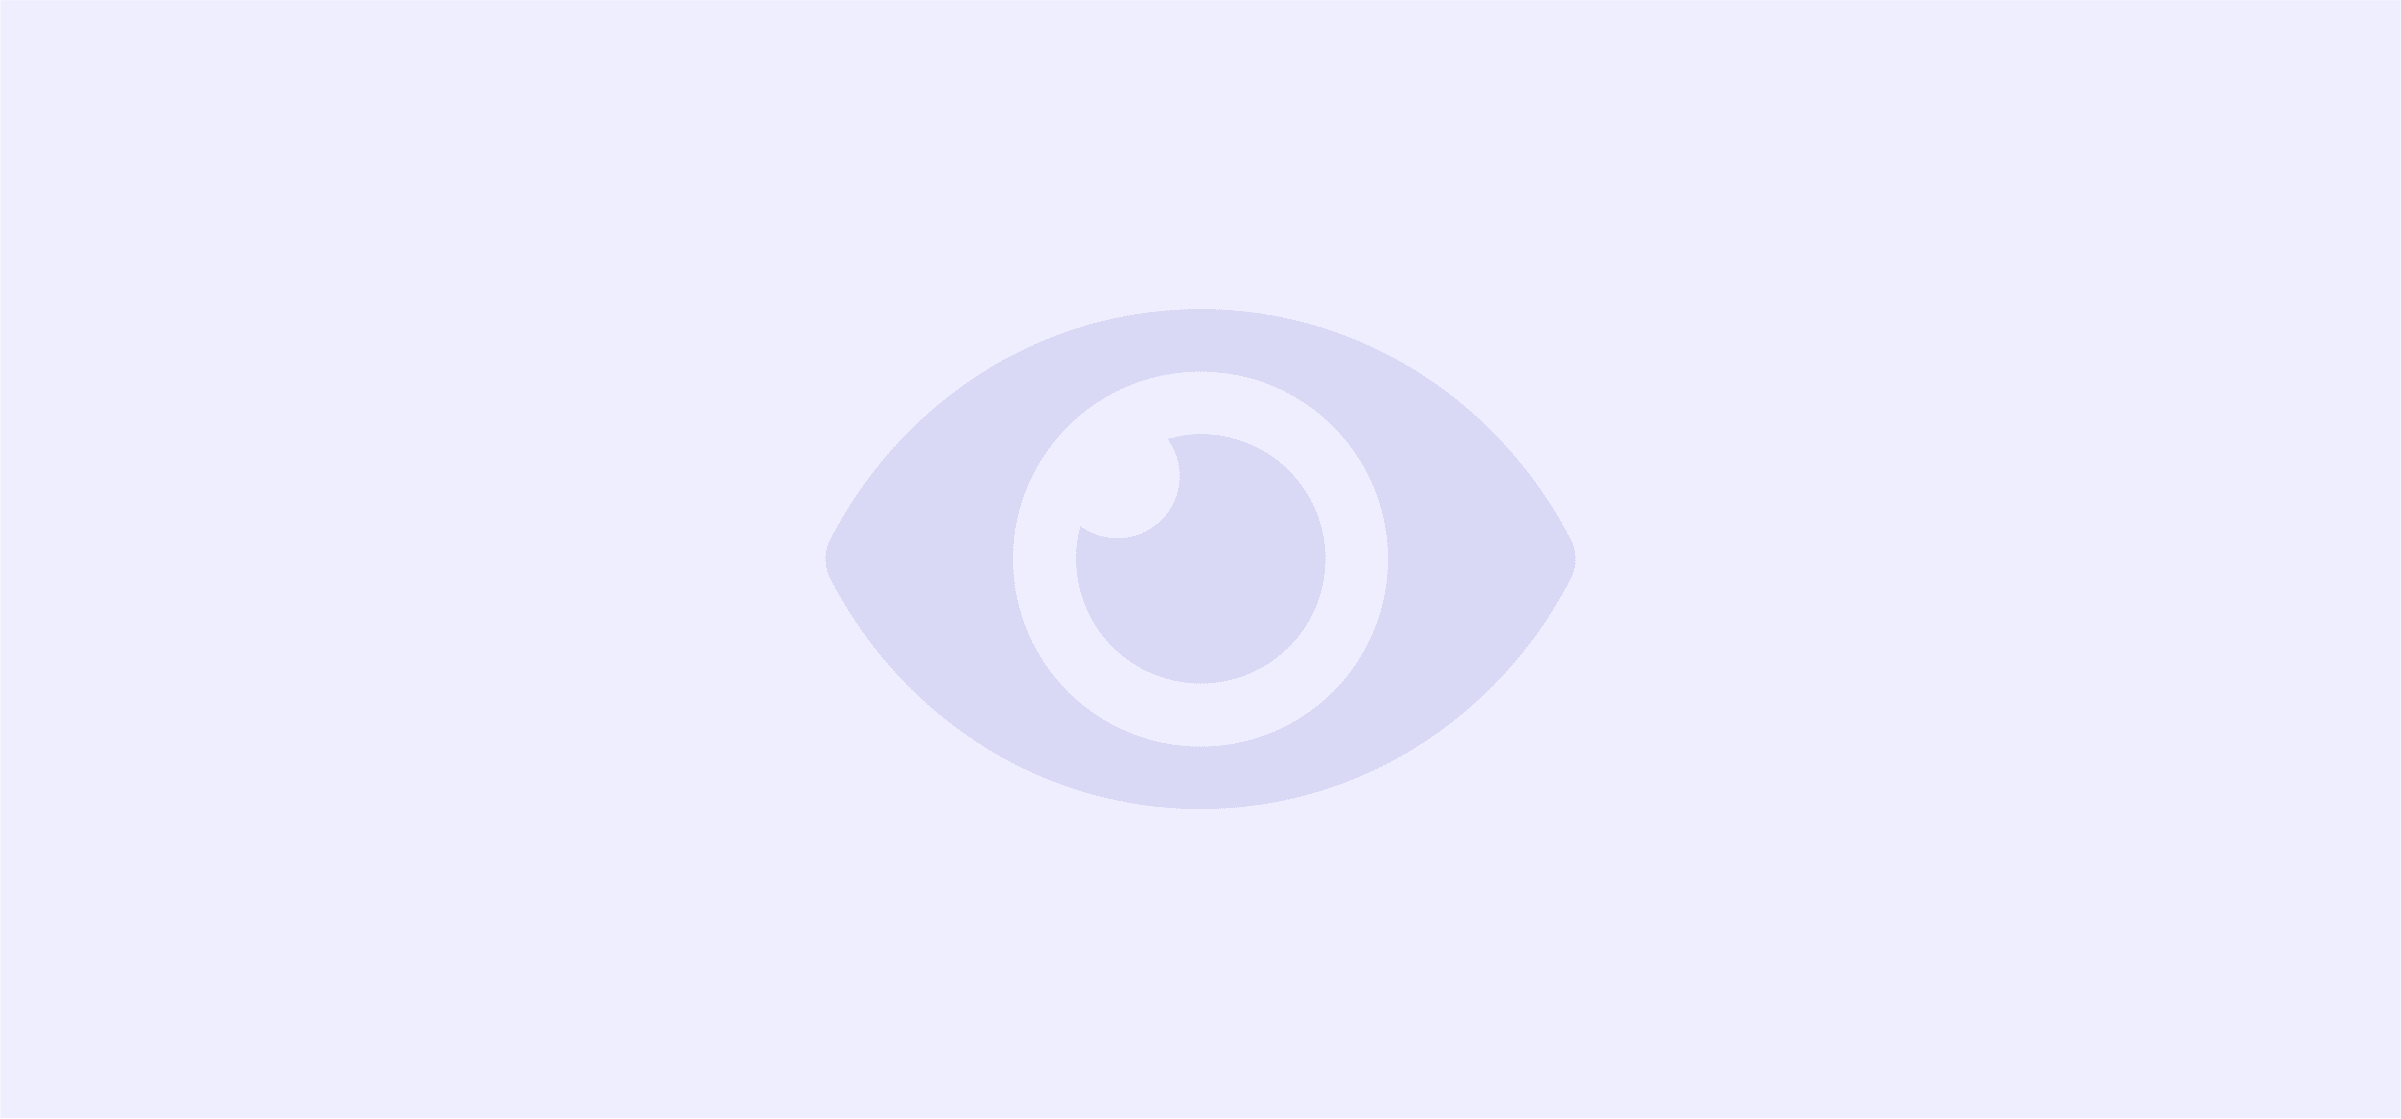 An illustration of an eye.